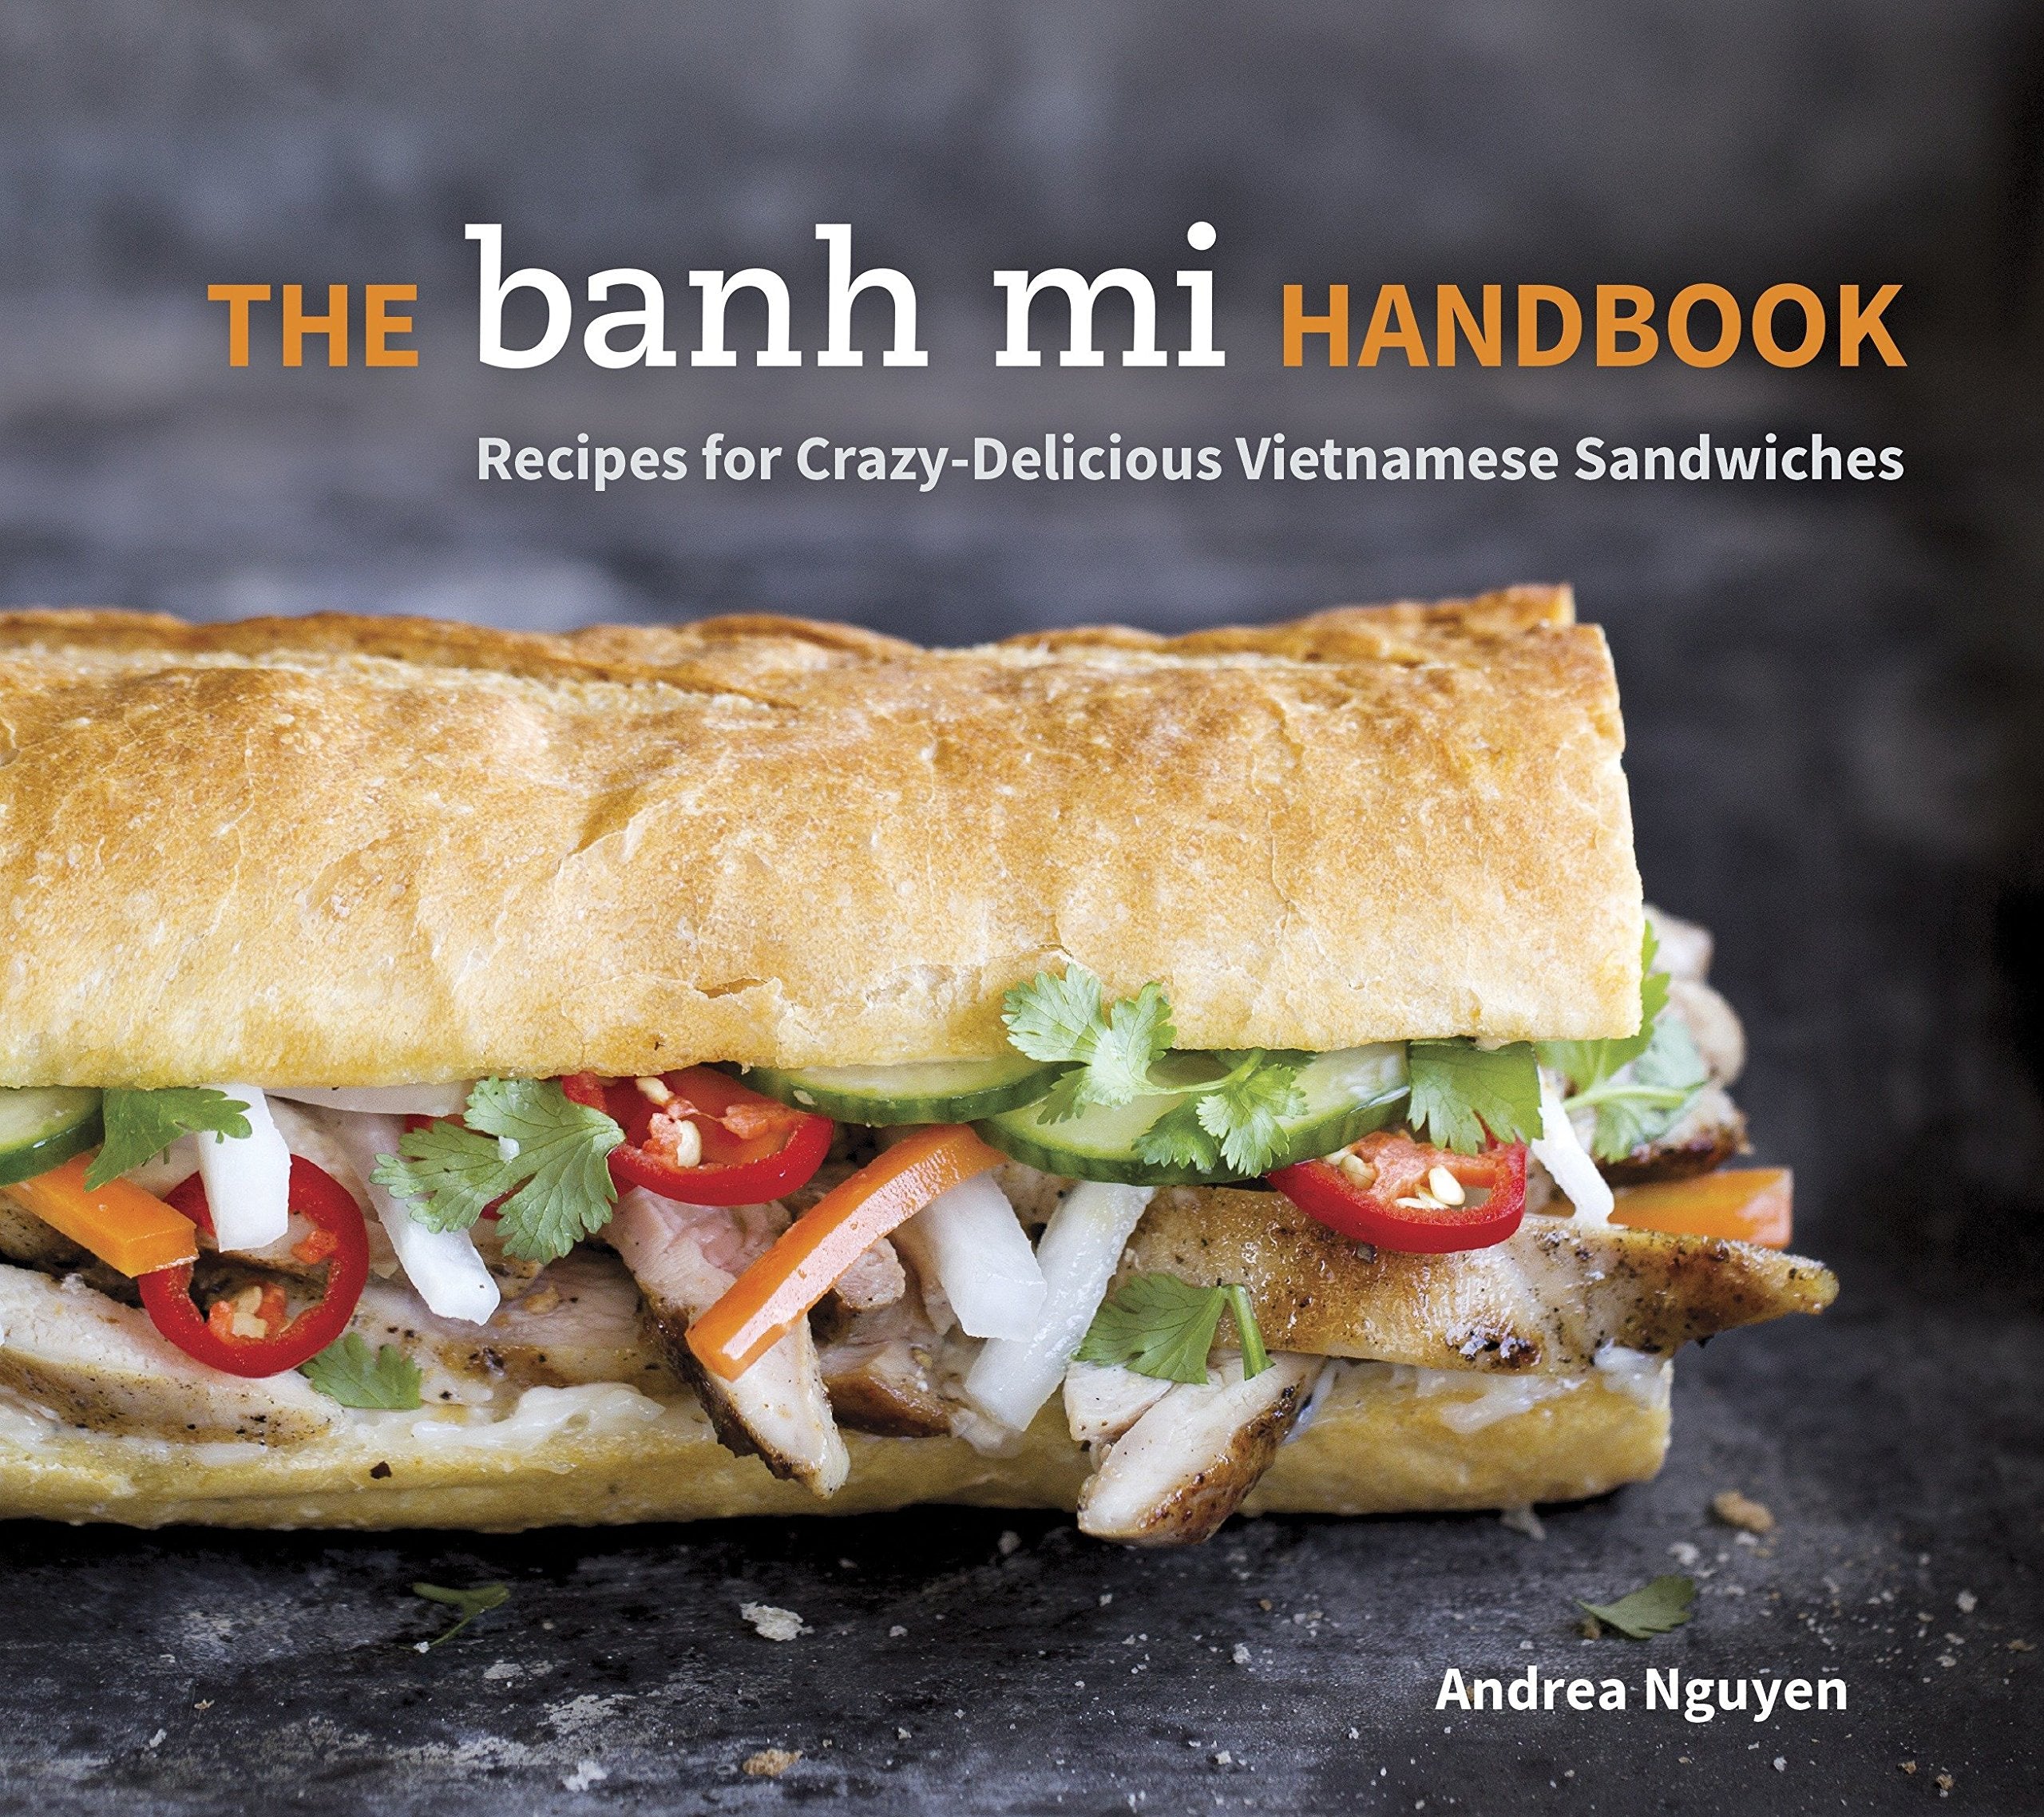 The Banh Mi Handbook: Recipes for Crazy-Delicious Vietnamese Sandwiches (Andrea Nguyen)